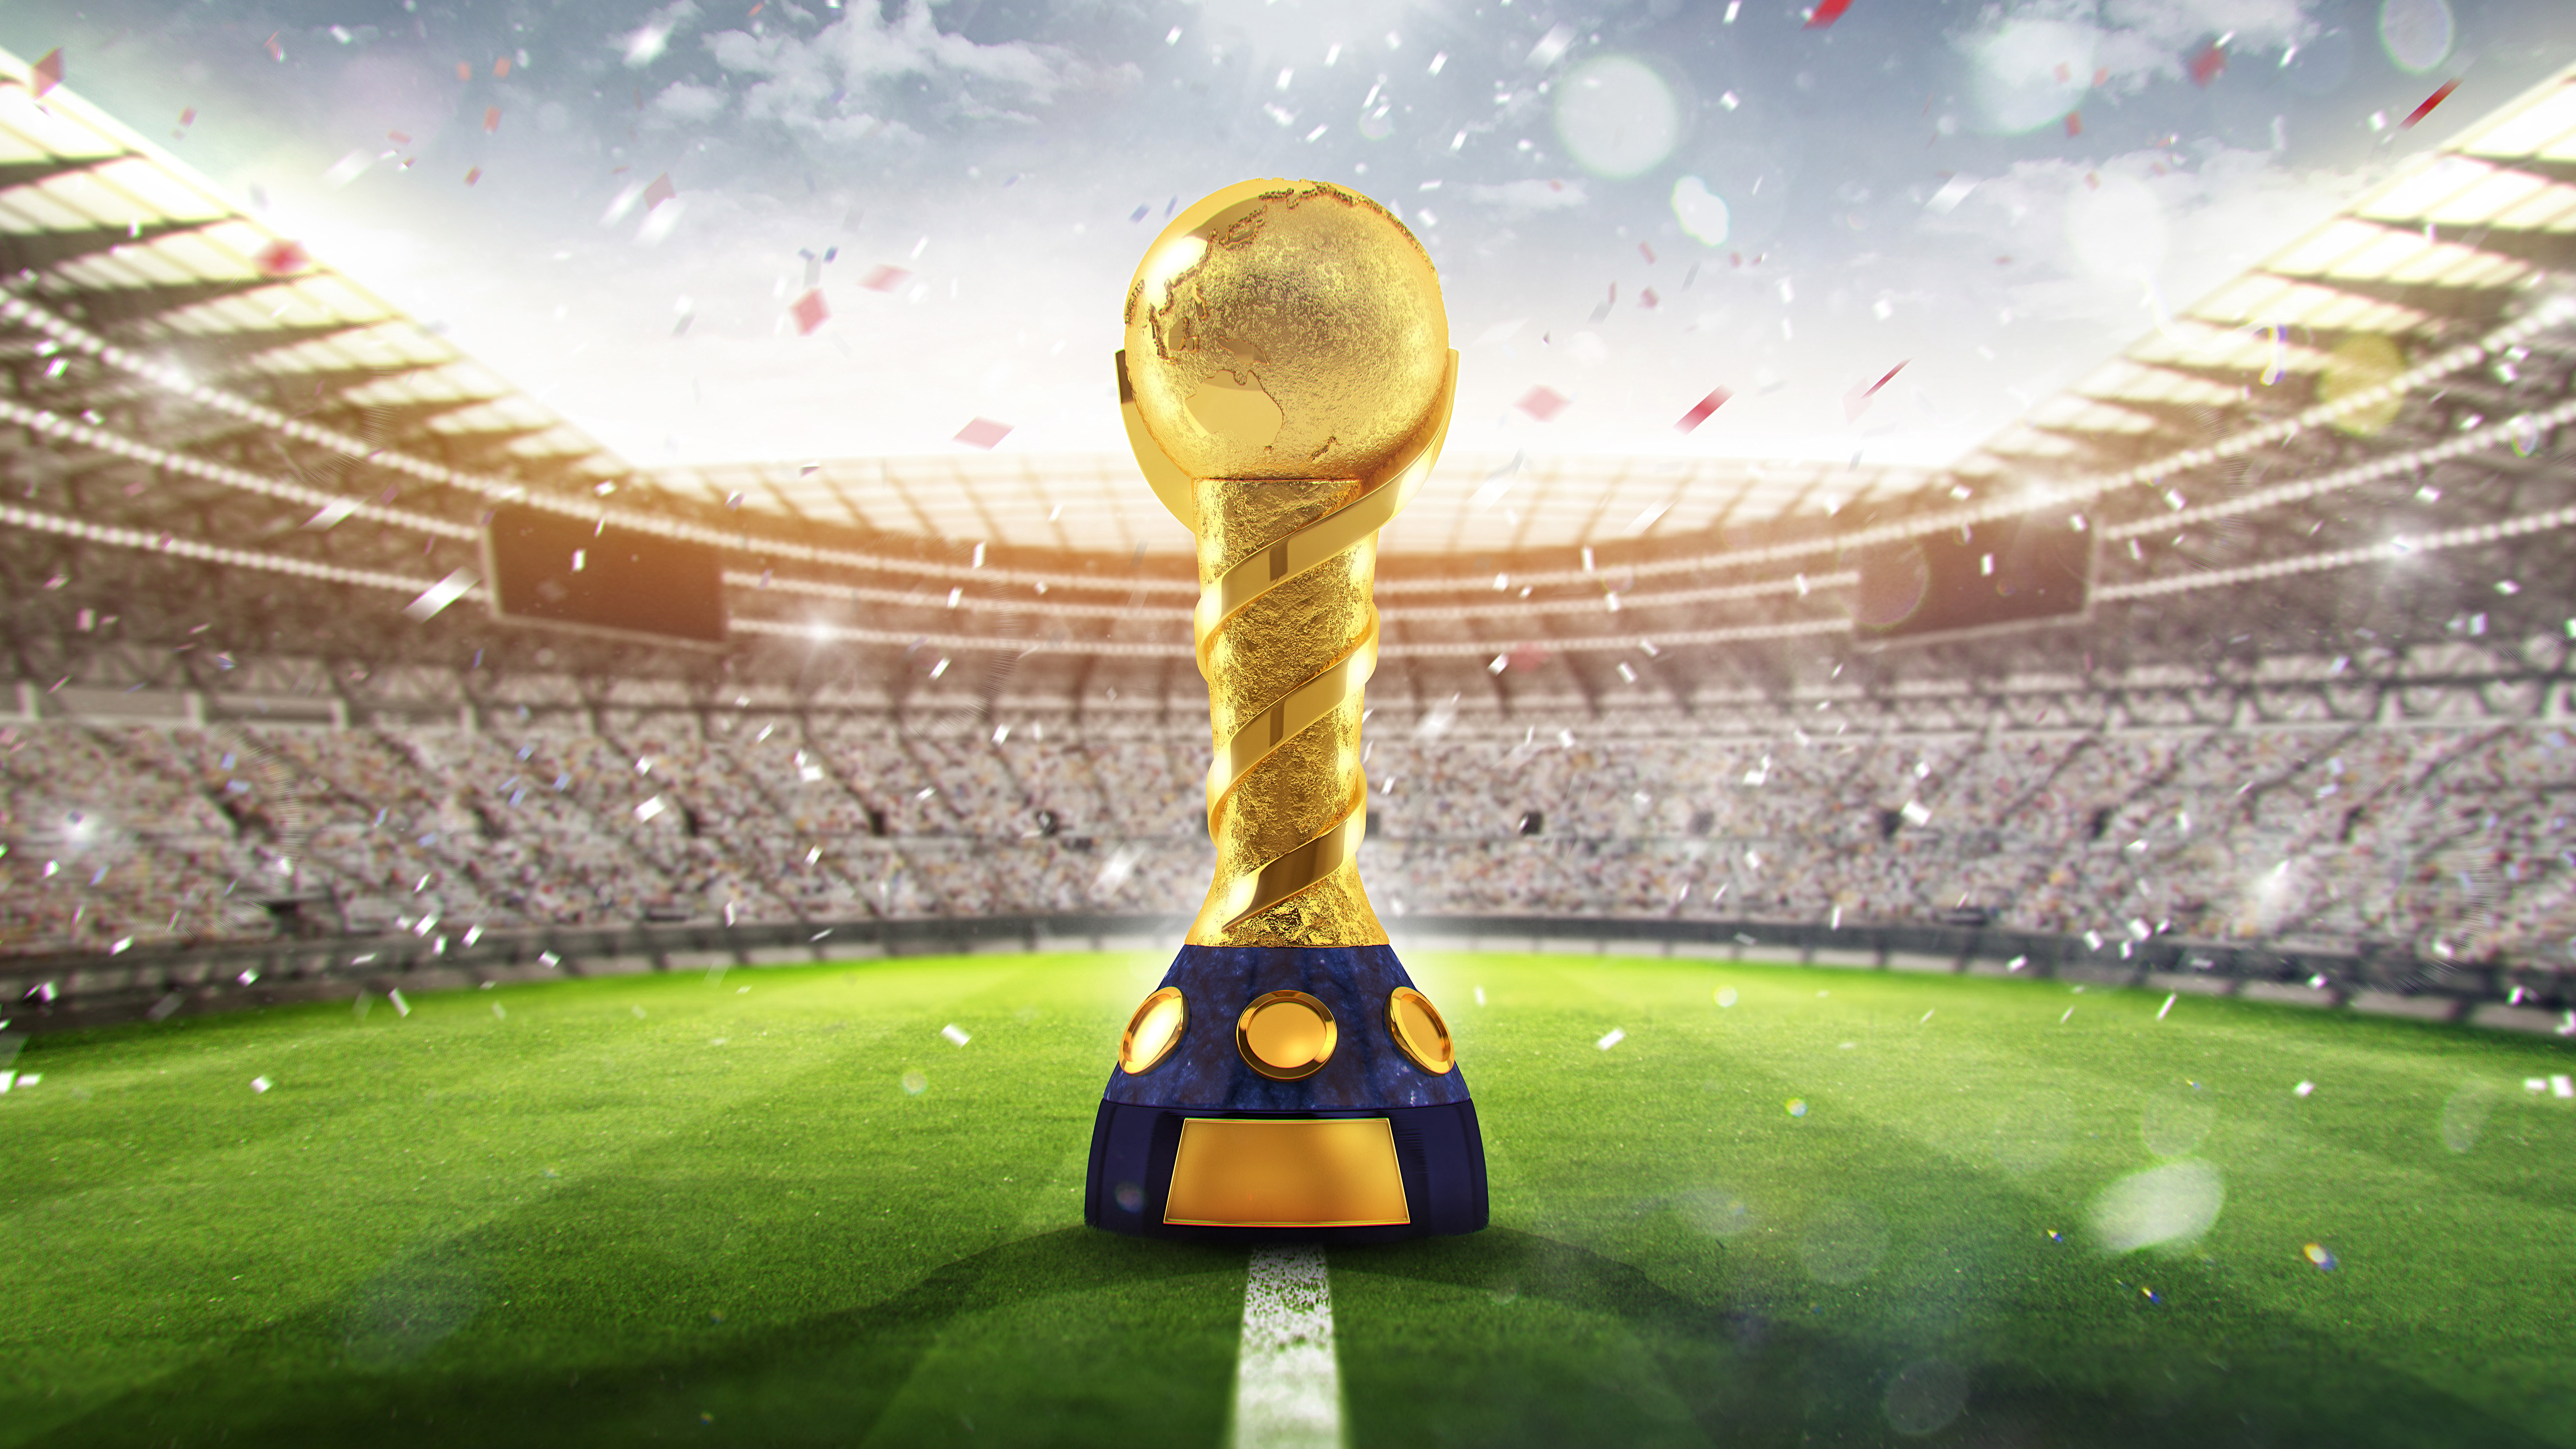 fifa world cup wallpaper,sport venue,stadium,football,trophy,soccer specific stadium